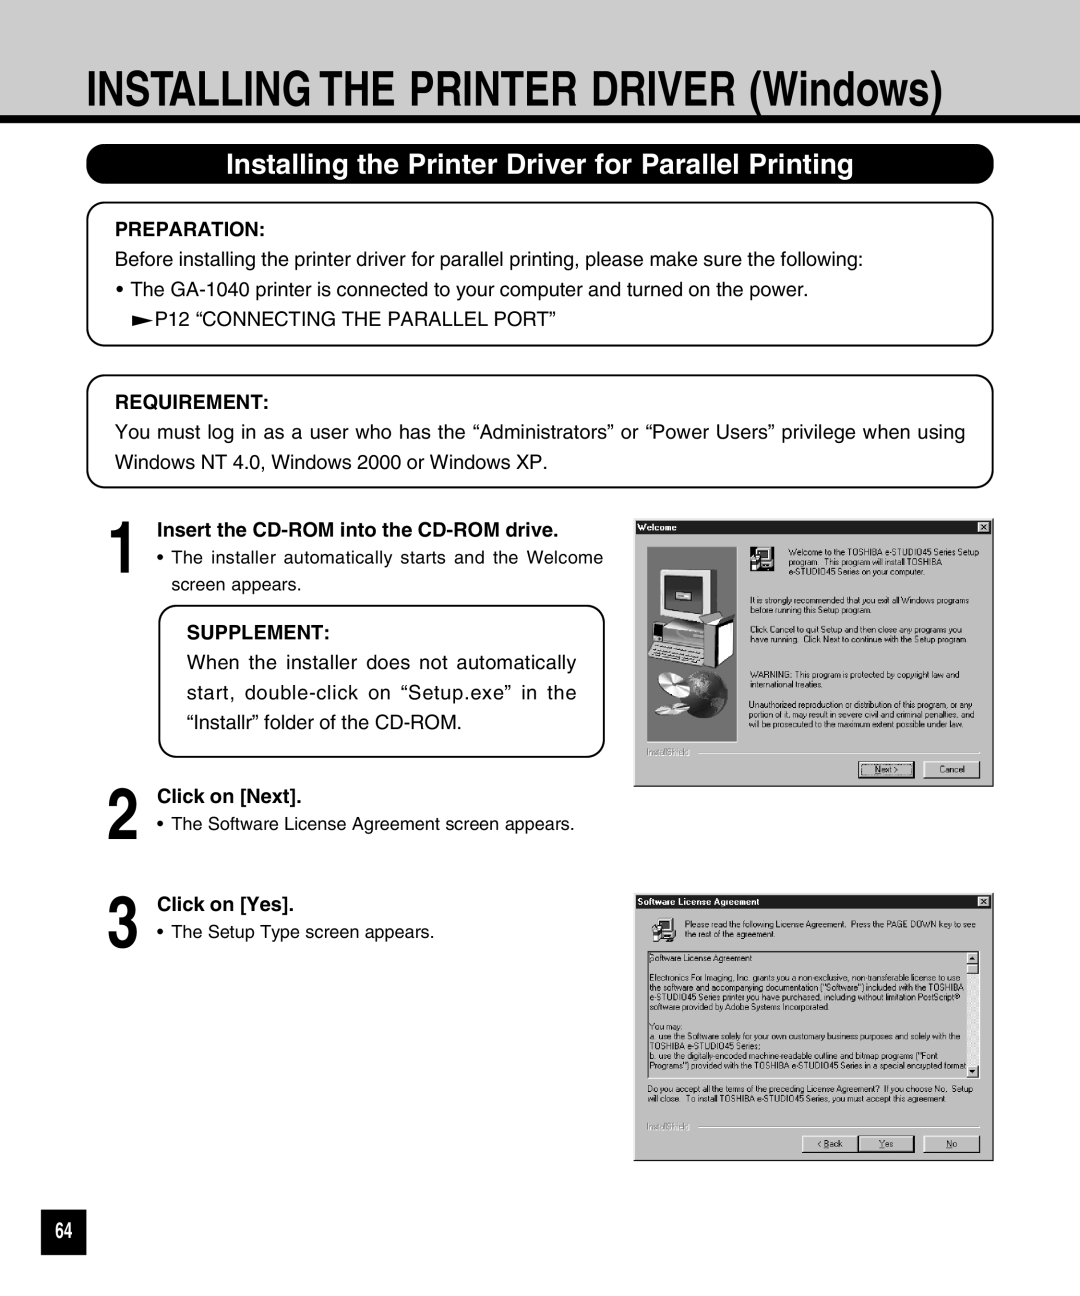 Toshiba GA-1040 Installing the Printer Driver for Parallel Printing, INSTALLING THE PRINTER DRIVER Windows, Preparation 